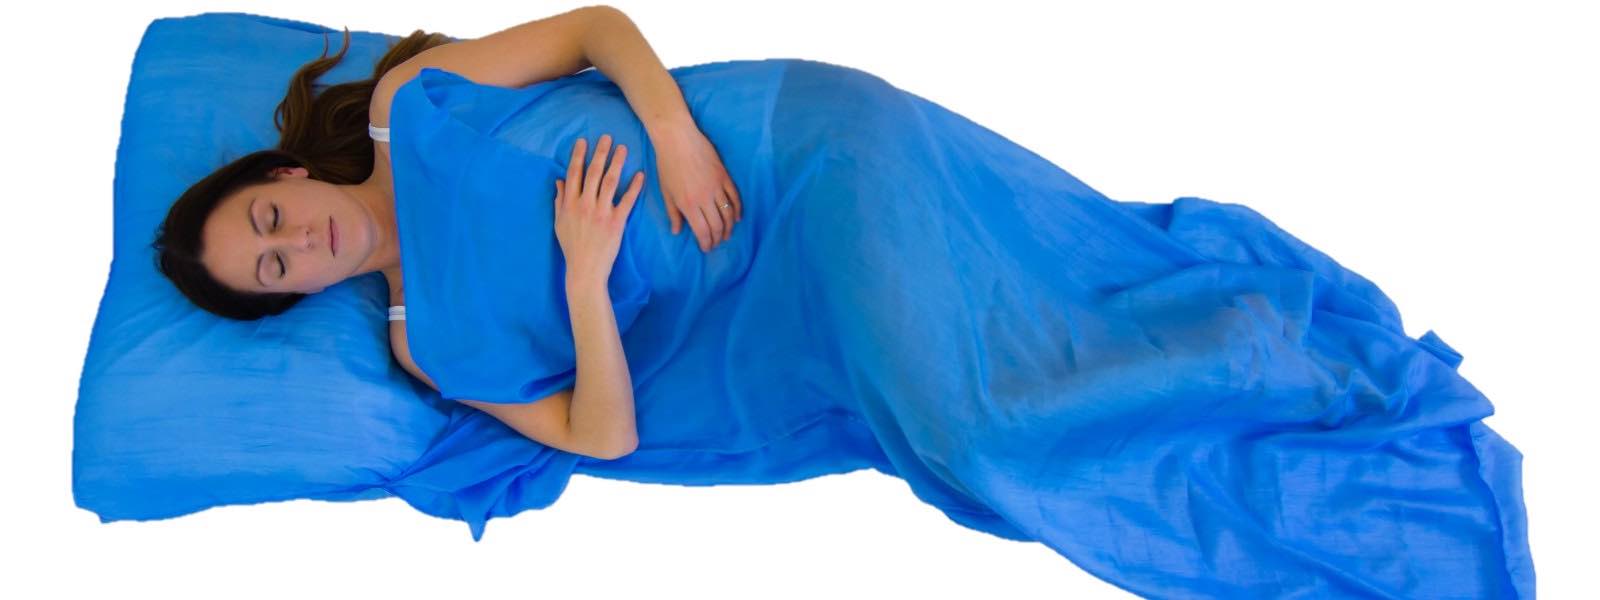 Shocking Photos Of Silk Sleeping Bag Ideas